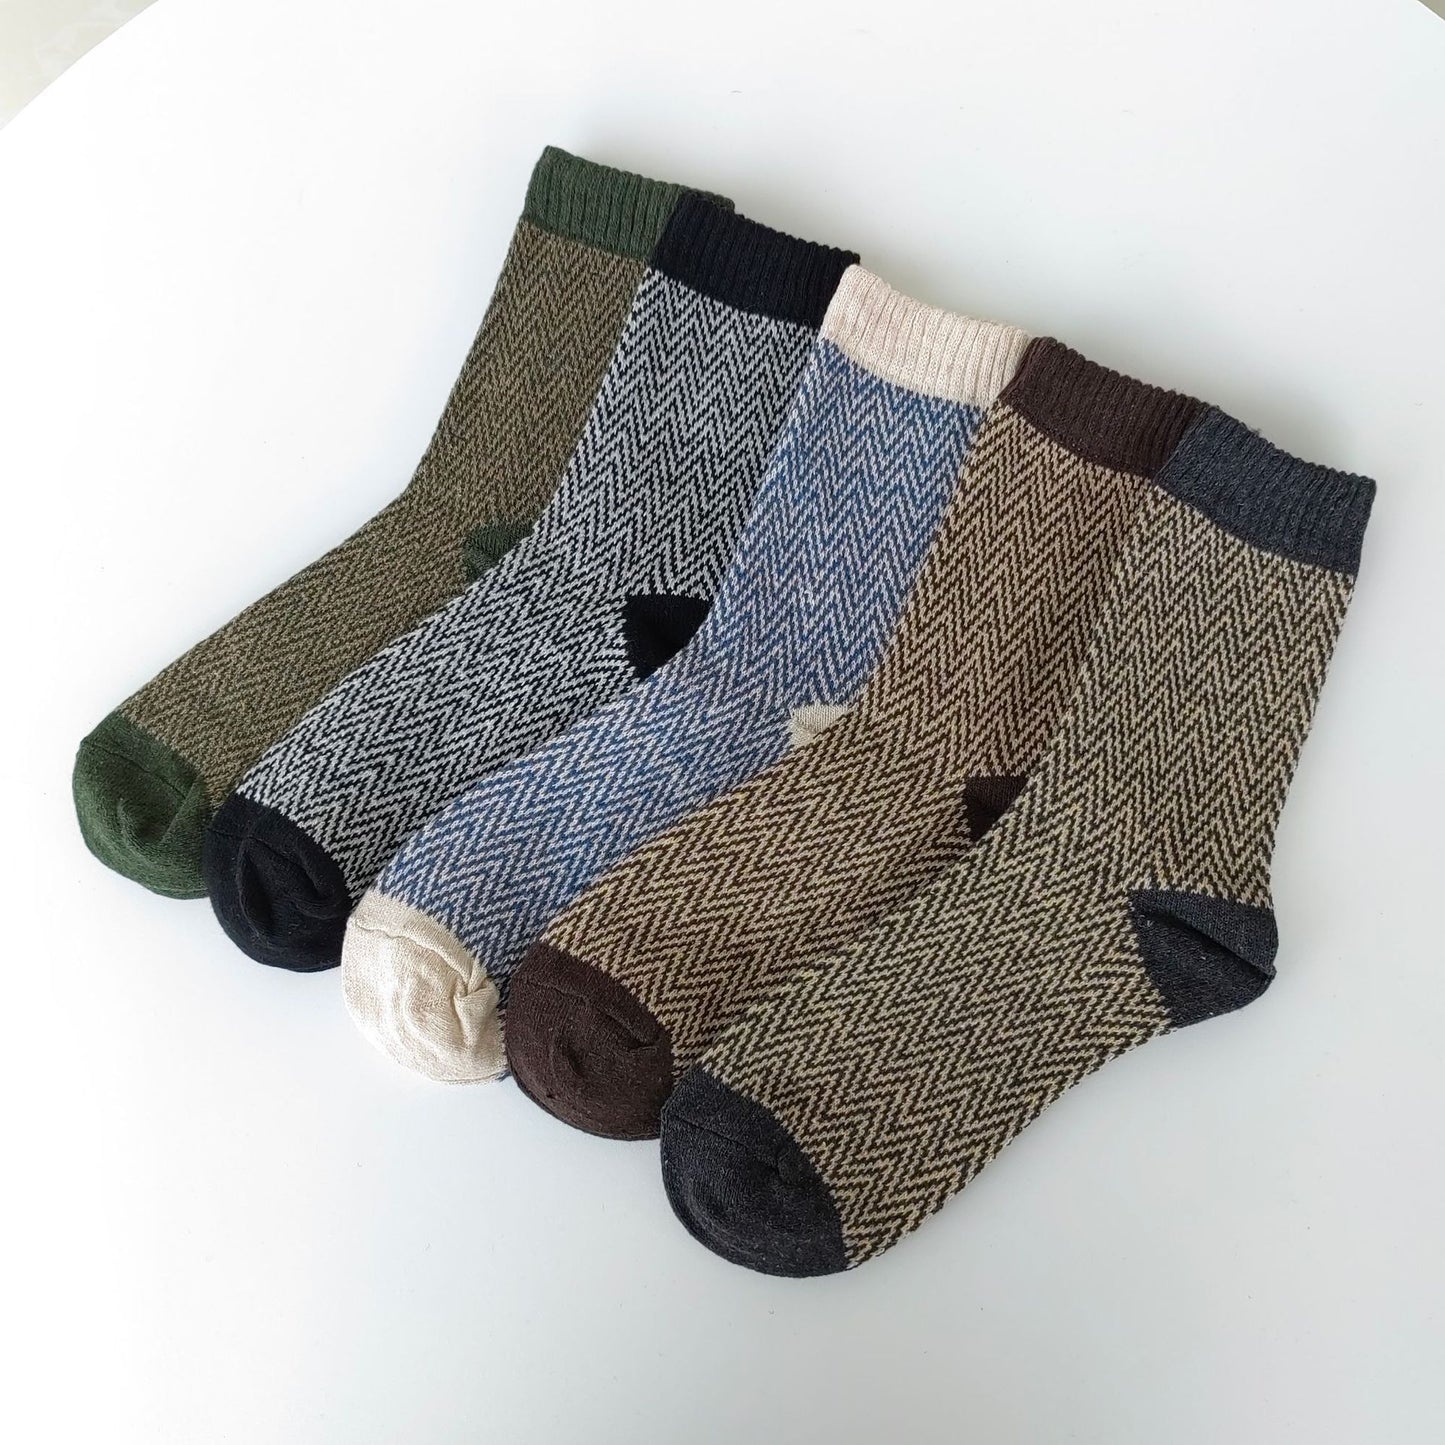 Autumn And Winter New Men's Wool Socks Floor  Retro